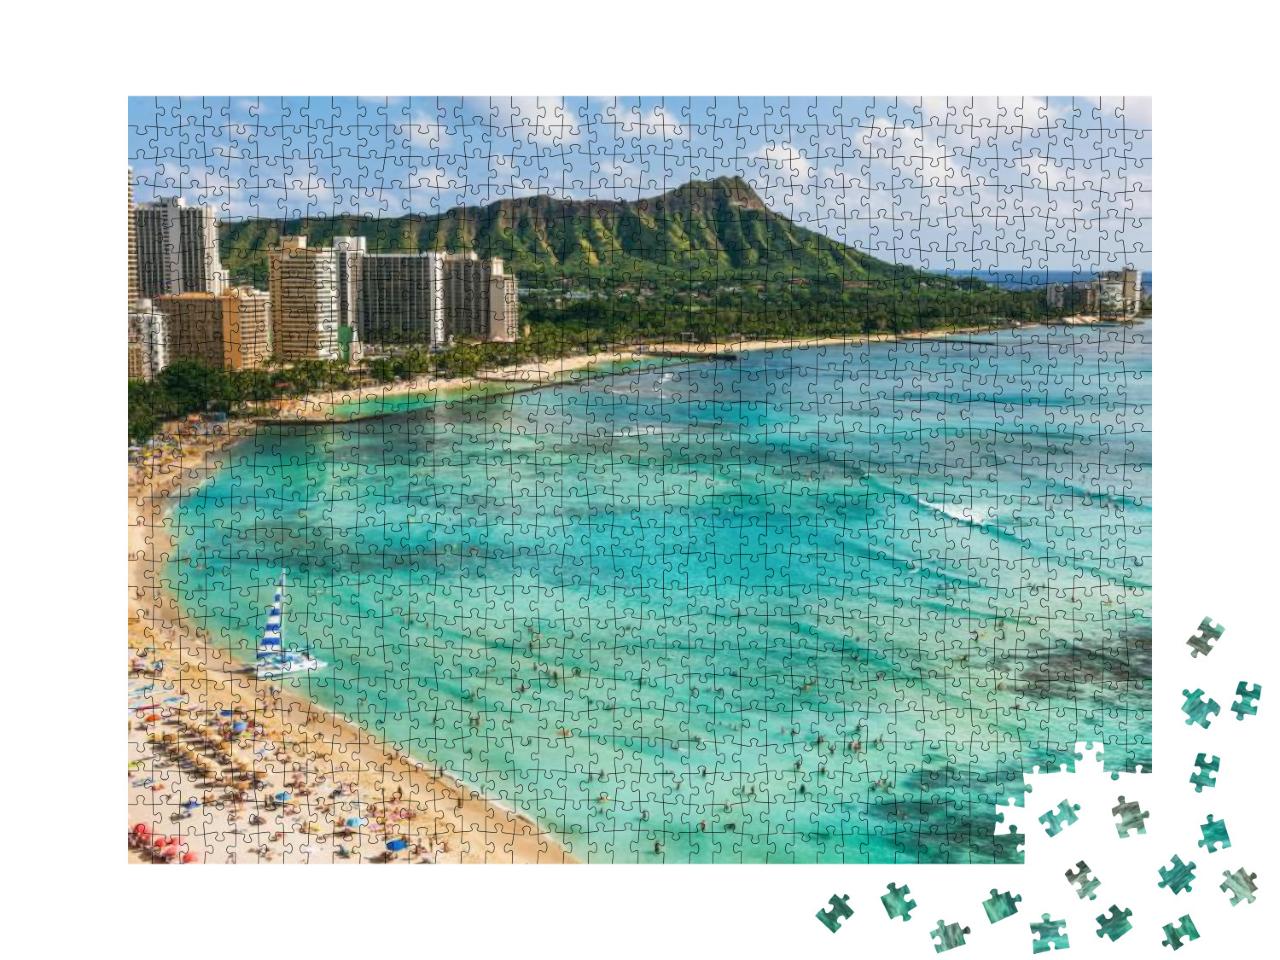 Hawaii Beach Honolulu City Travel Landscape of Waikiki Be... Jigsaw Puzzle with 1000 pieces